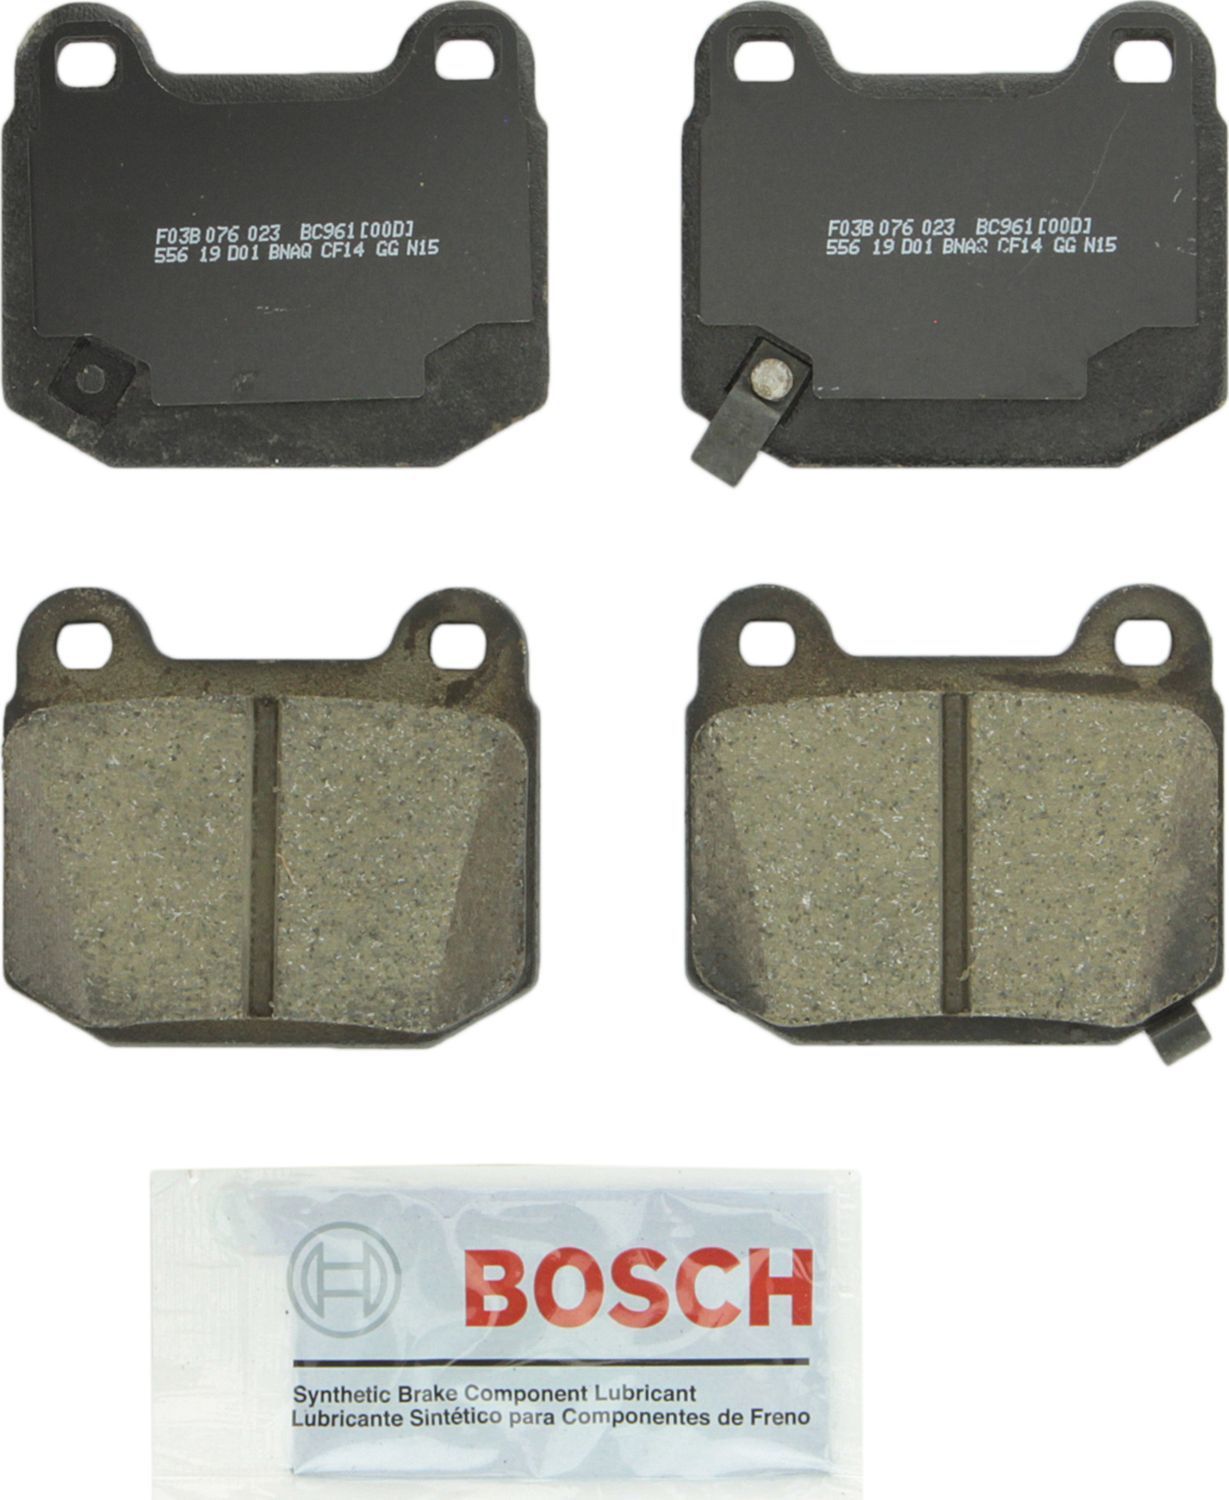 BOSCH BRAKE - Bosch QuietCast Brake Pad Ceramic Brake Pads (Rear) - BQC BC961